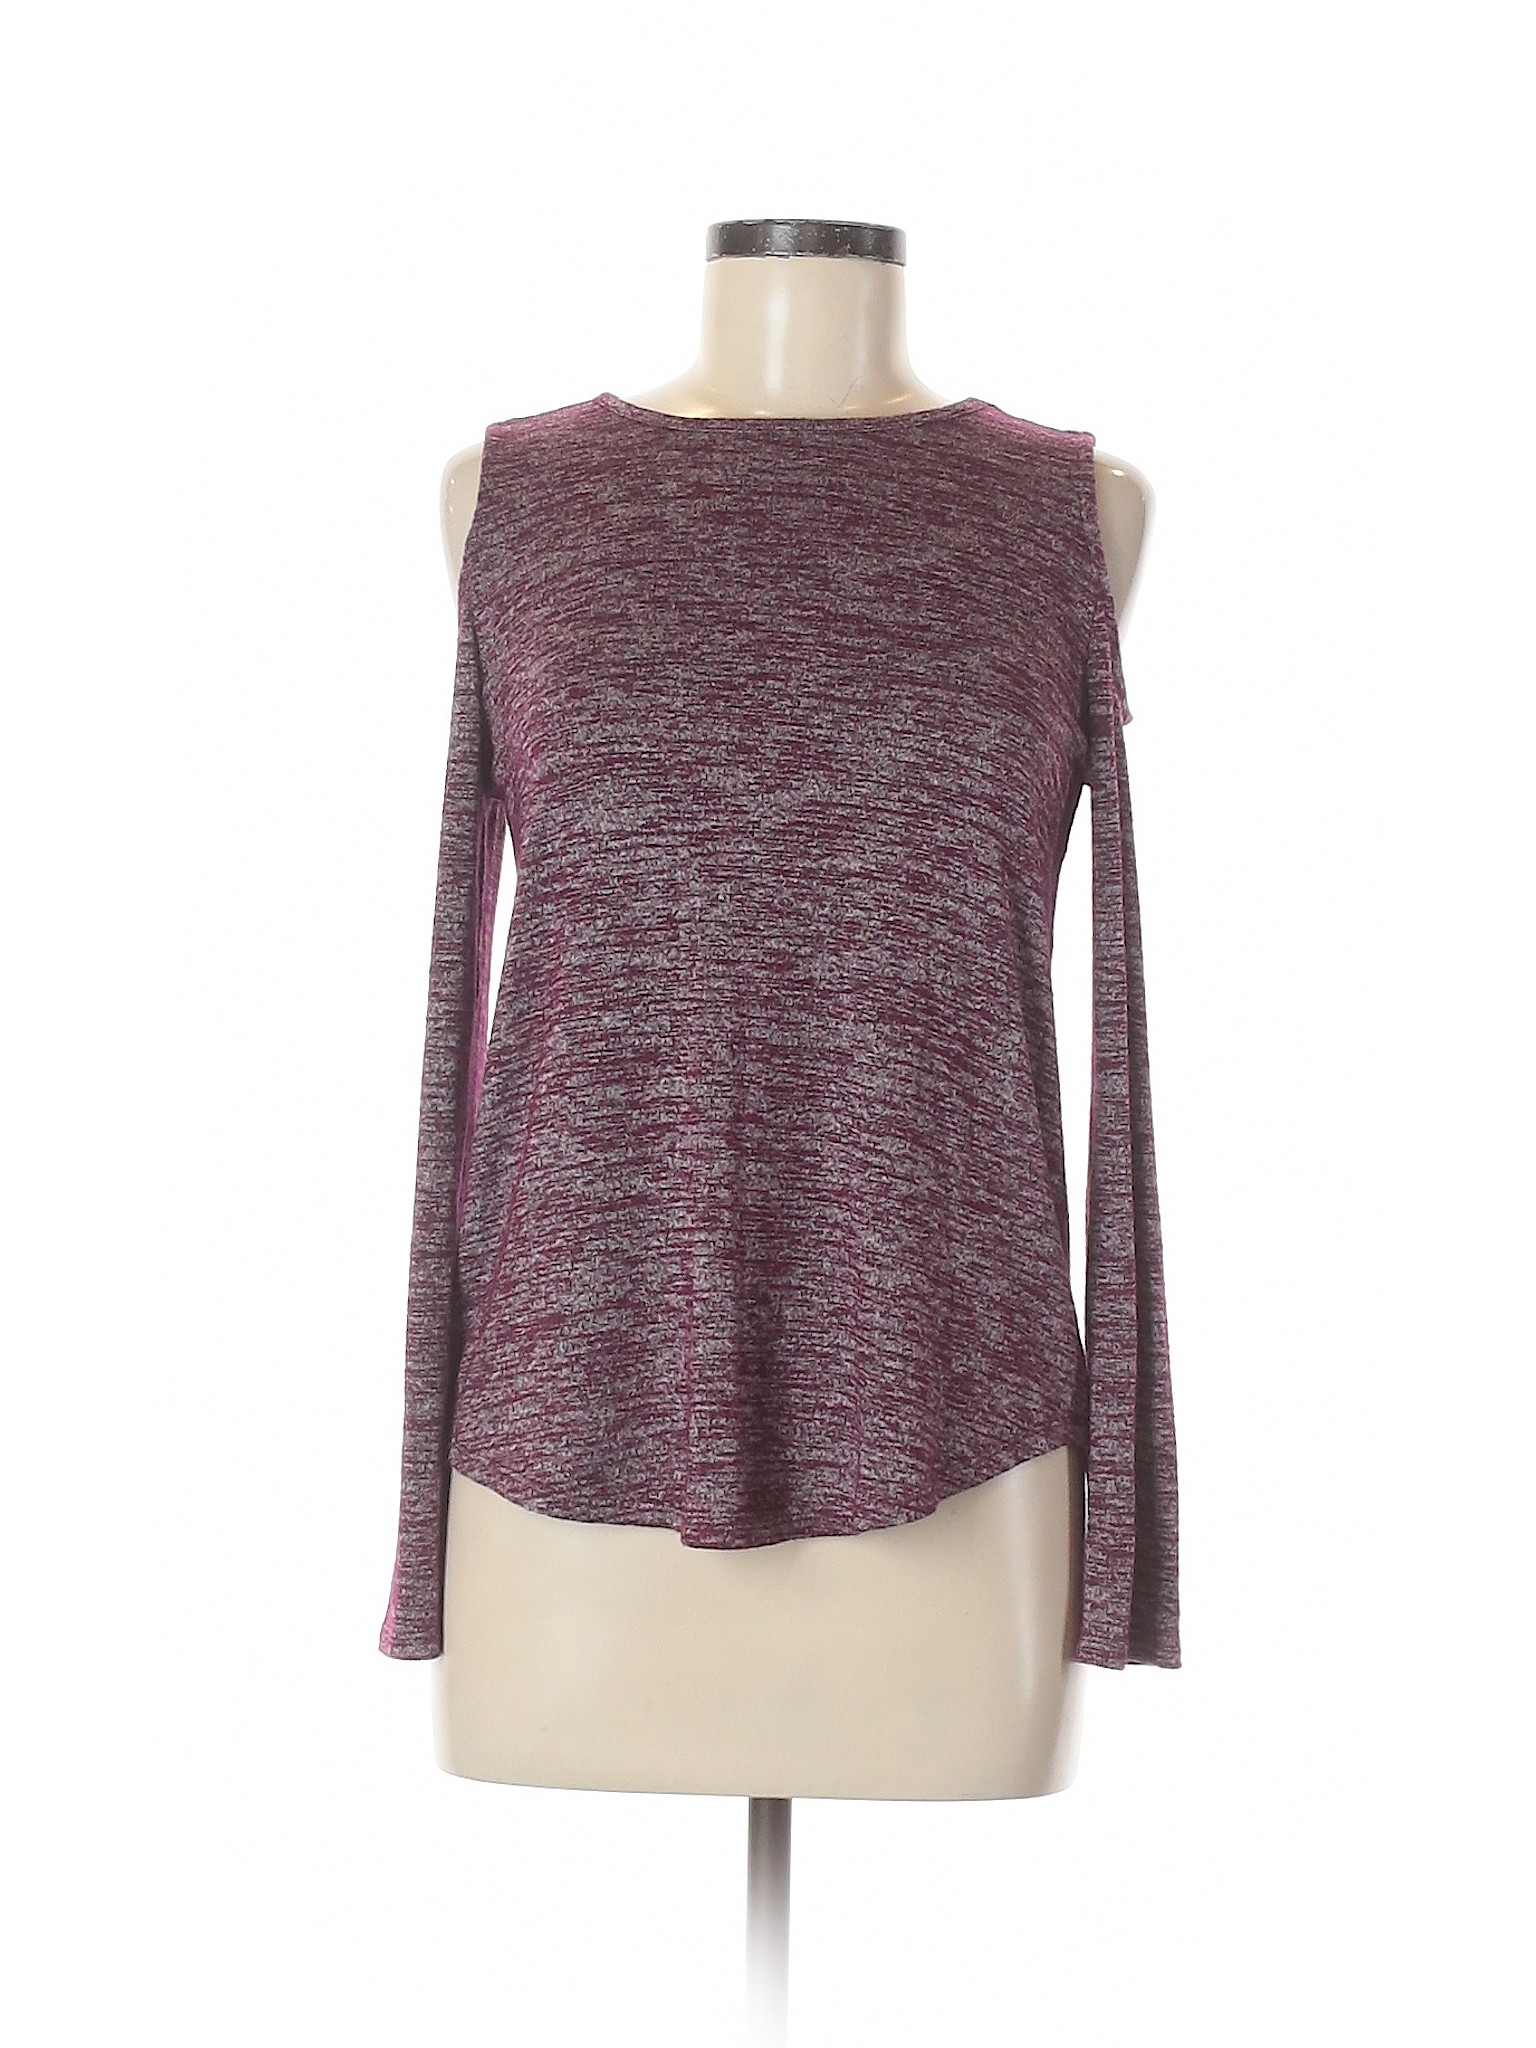 Assorted Brands Women Purple Long Sleeve Top XS | eBay